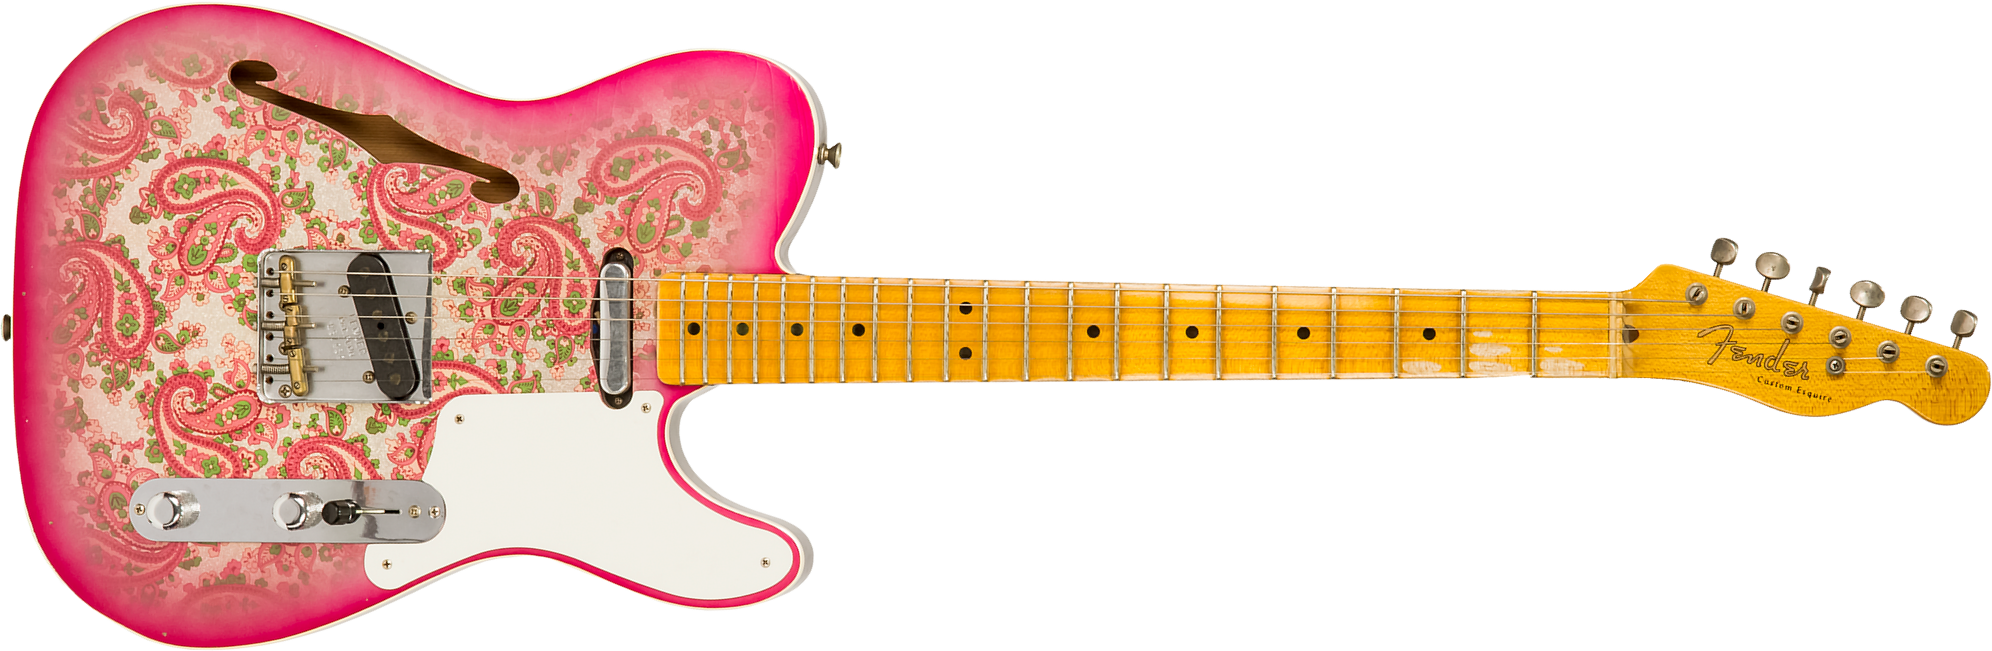 Fender Custom Shop Double Esquire/tele Custom 2s Ht Mn #r97434 - Journeyman Relic Aged Pink Paisley - Semi hollow elektriche gitaar - Main picture